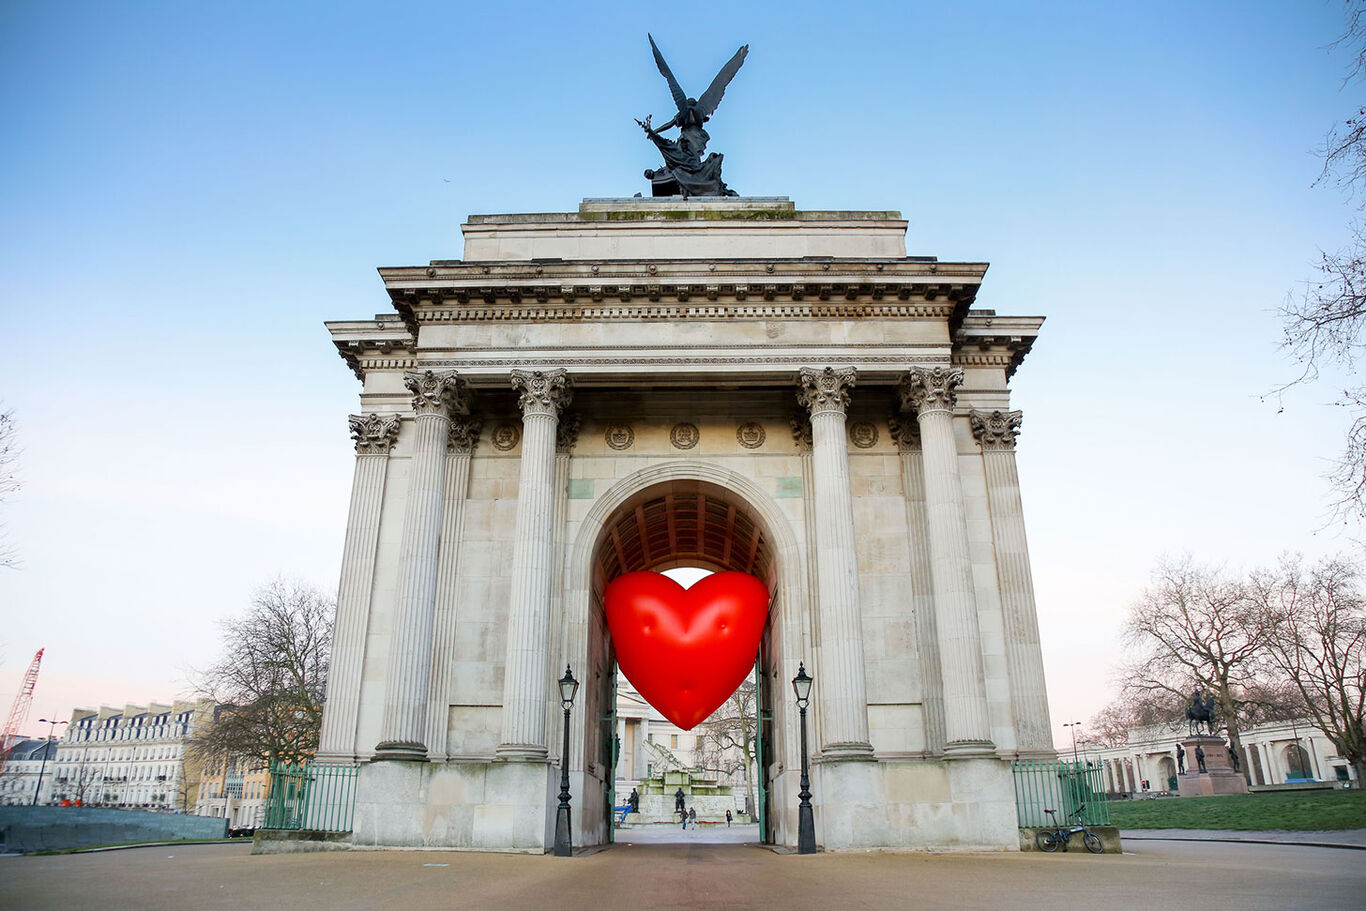 Chubby Hearts Over London